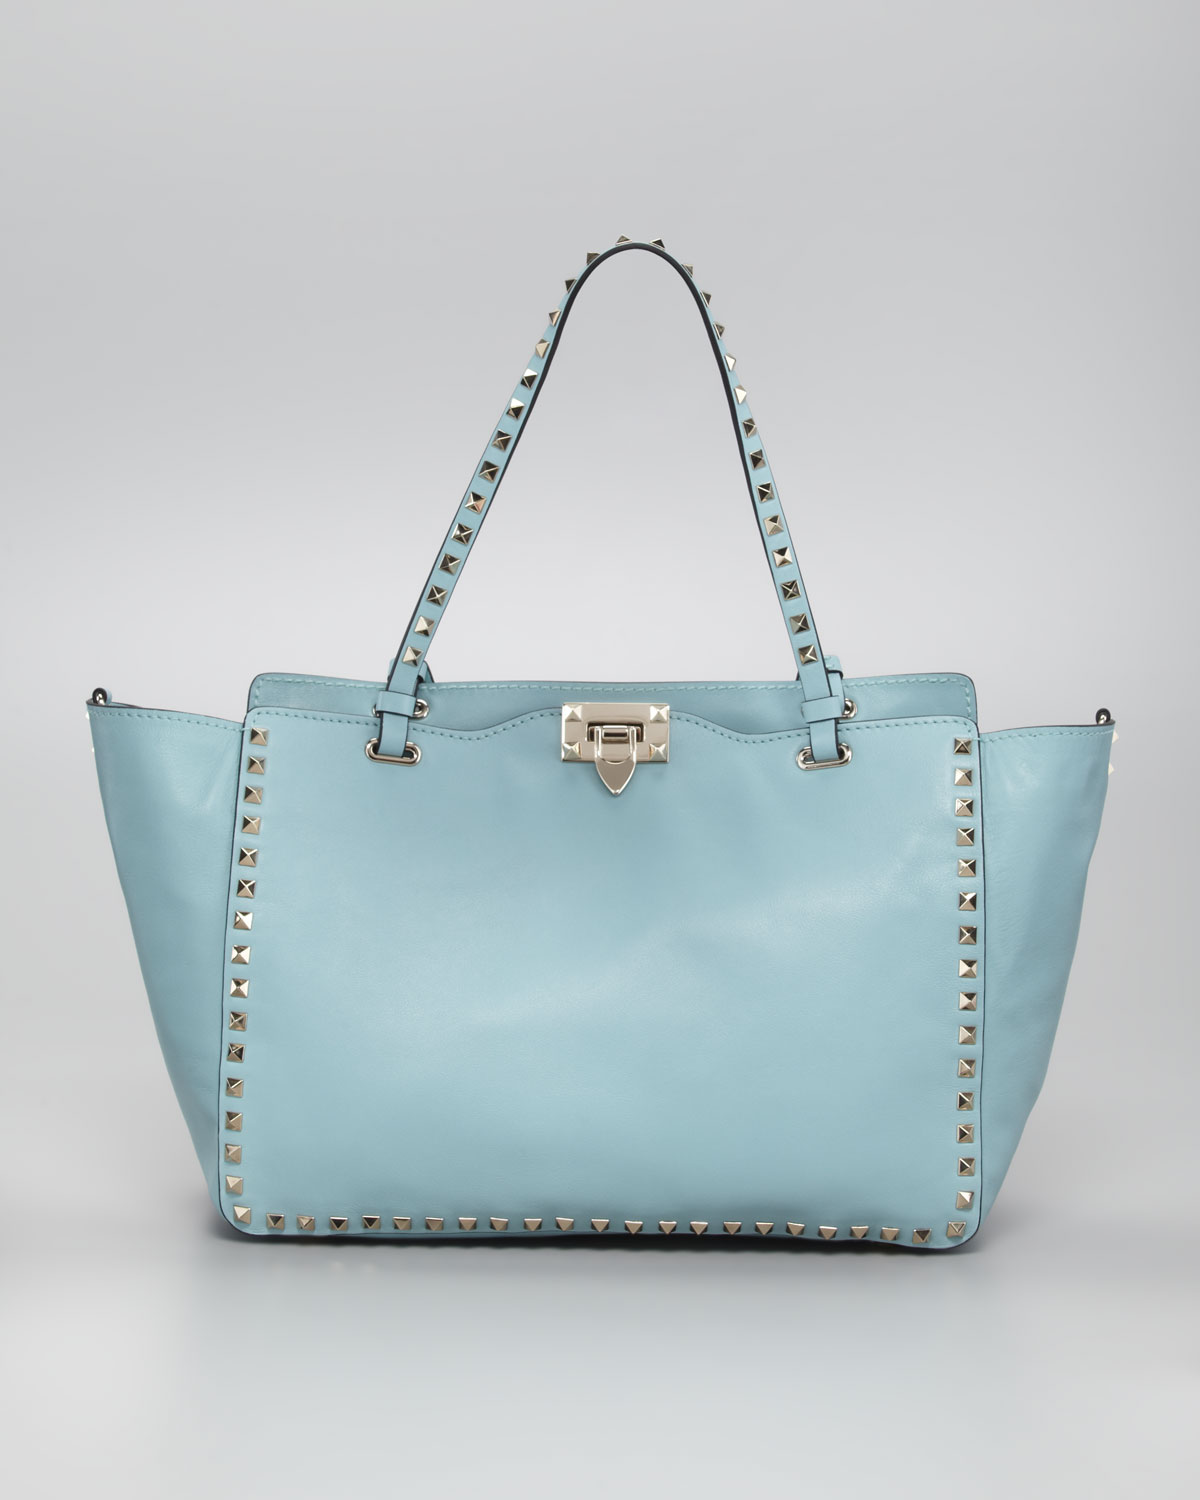 Lyst - Valentino Rockstud Medium Tote Bag in Blue